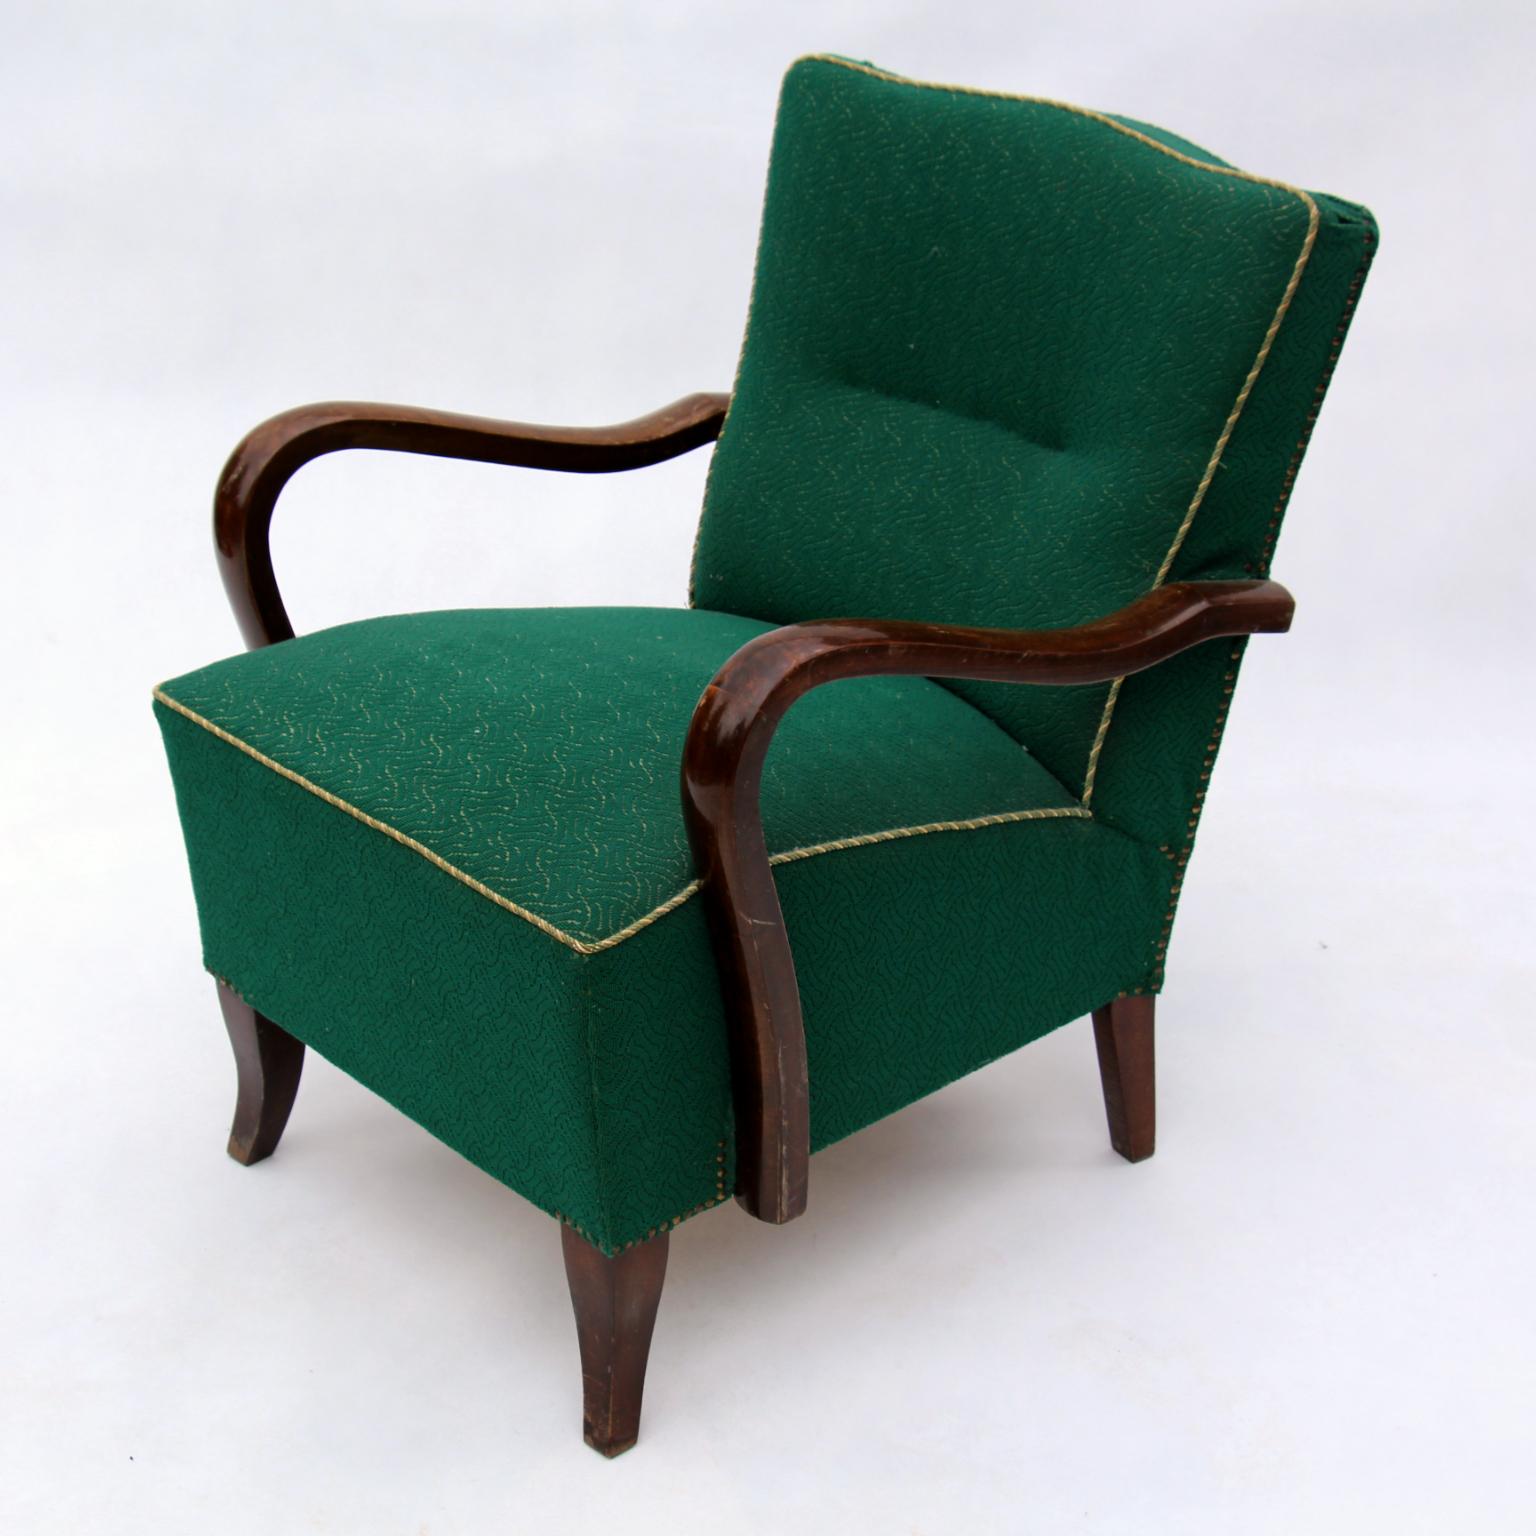 Pair of Art Deco armchairs in good original condition.